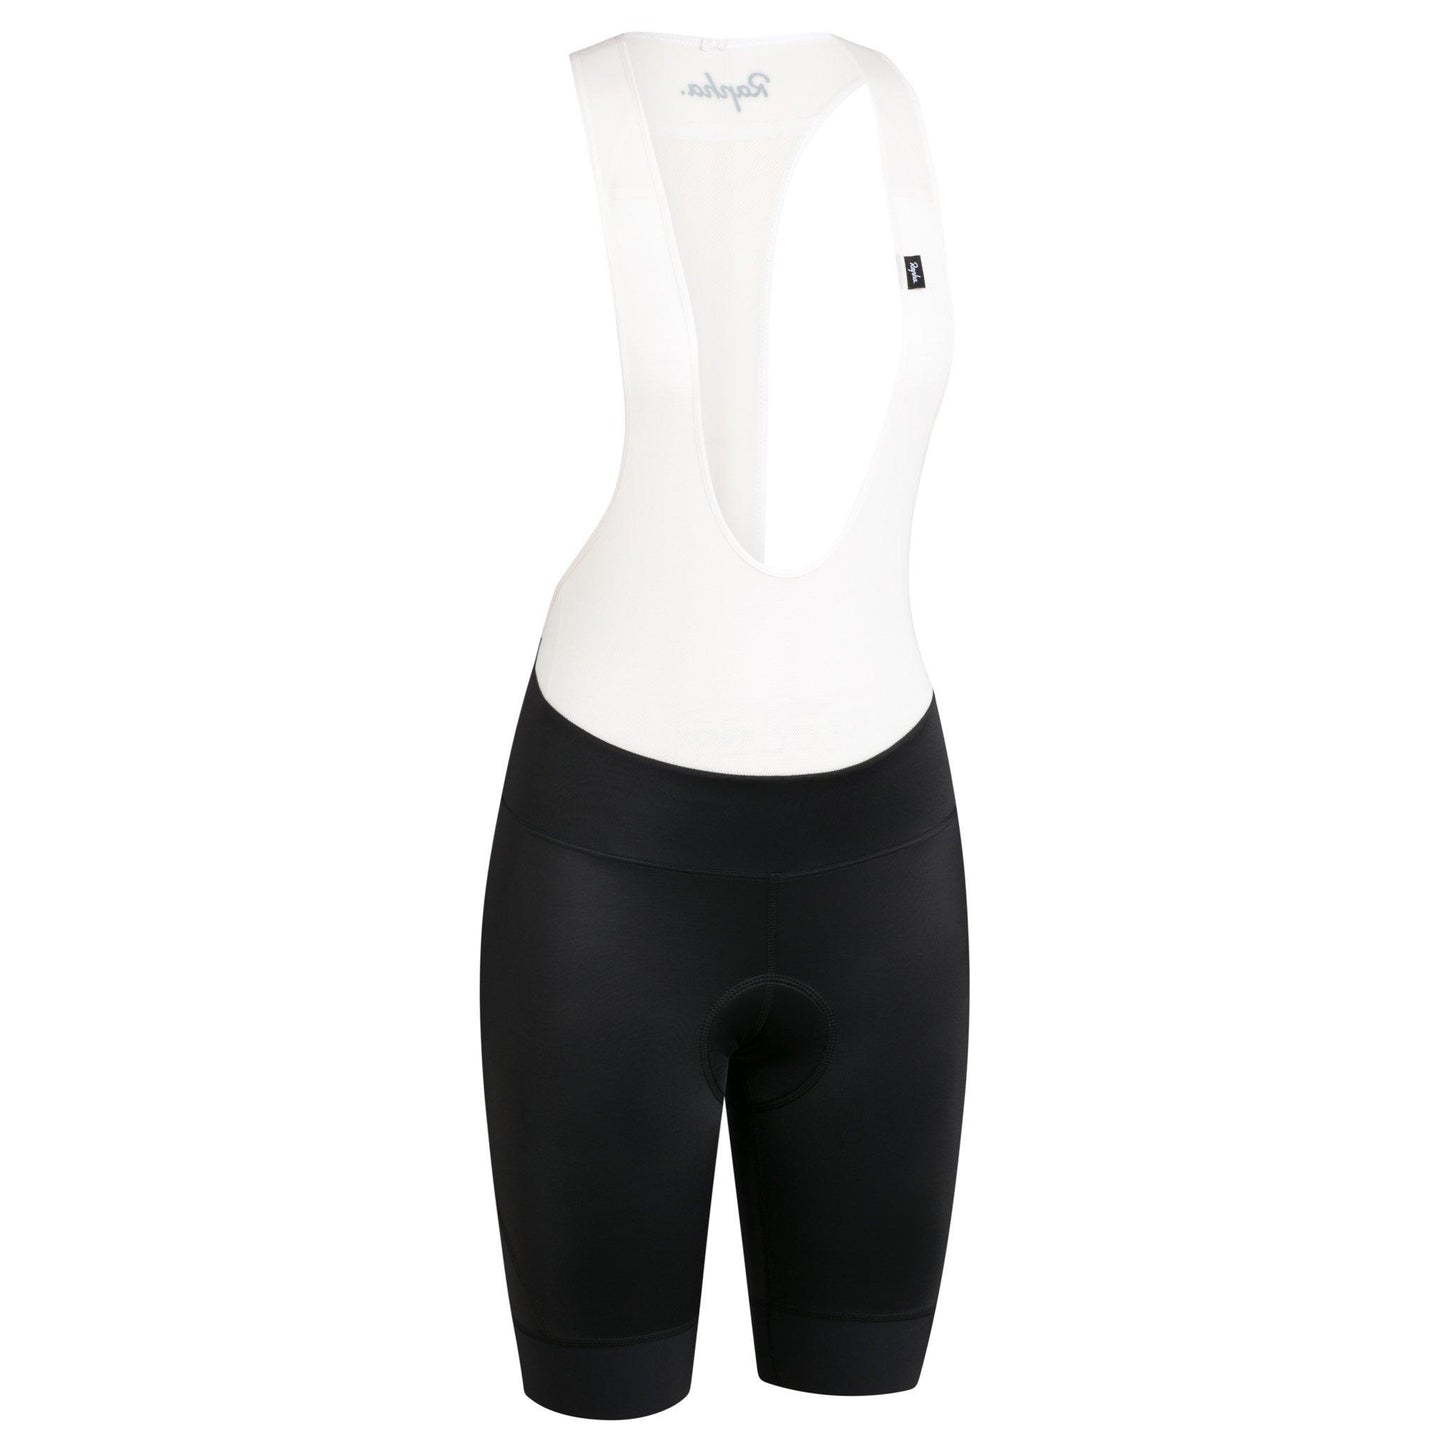 Rapha Women's Pro Team Detachable Race Bib Shorts - Black/White